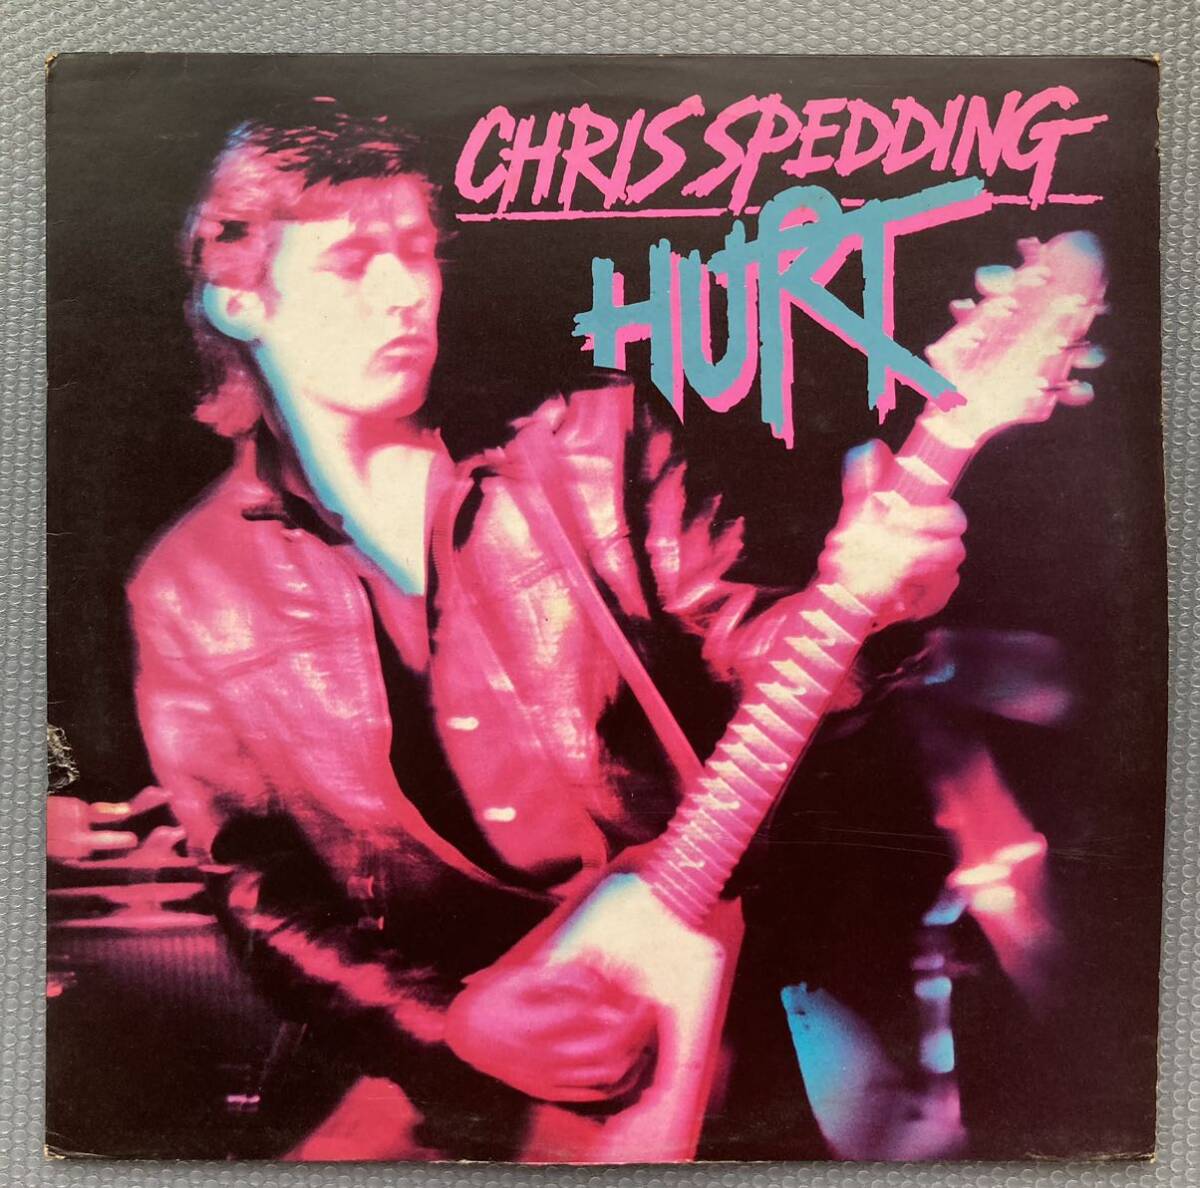 Chris Spedding Hurt クリス・スペディング LP UK盤 中古 レコード_画像1